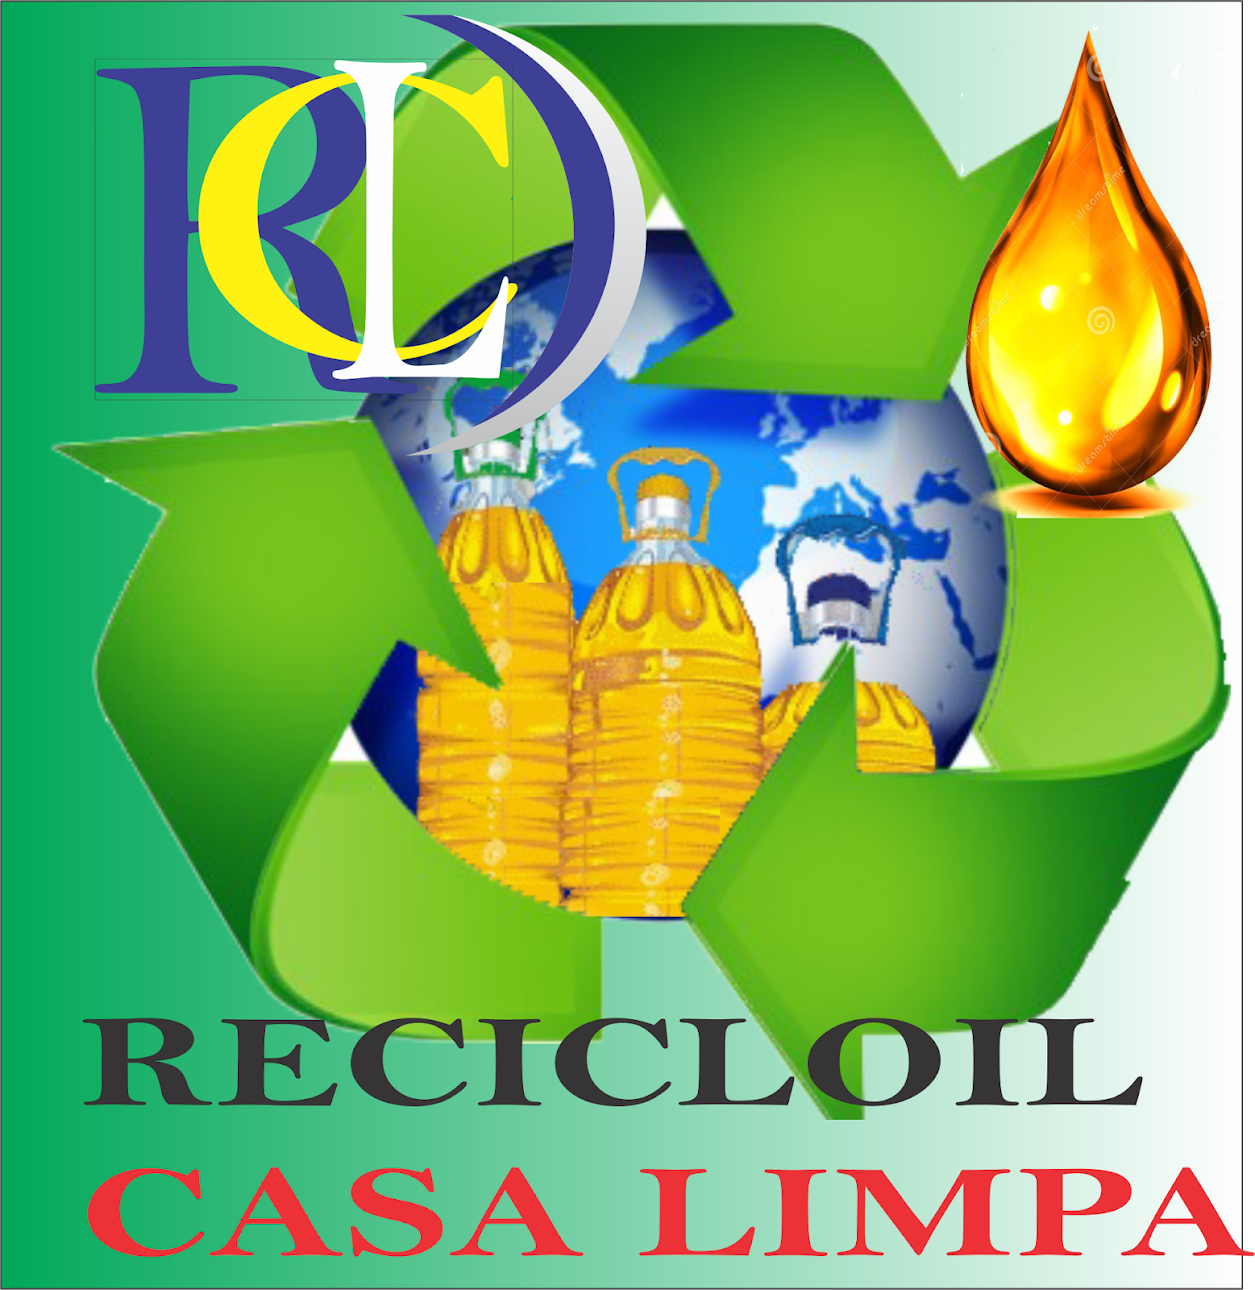 RECL  RECICOIL CASA LIMPA